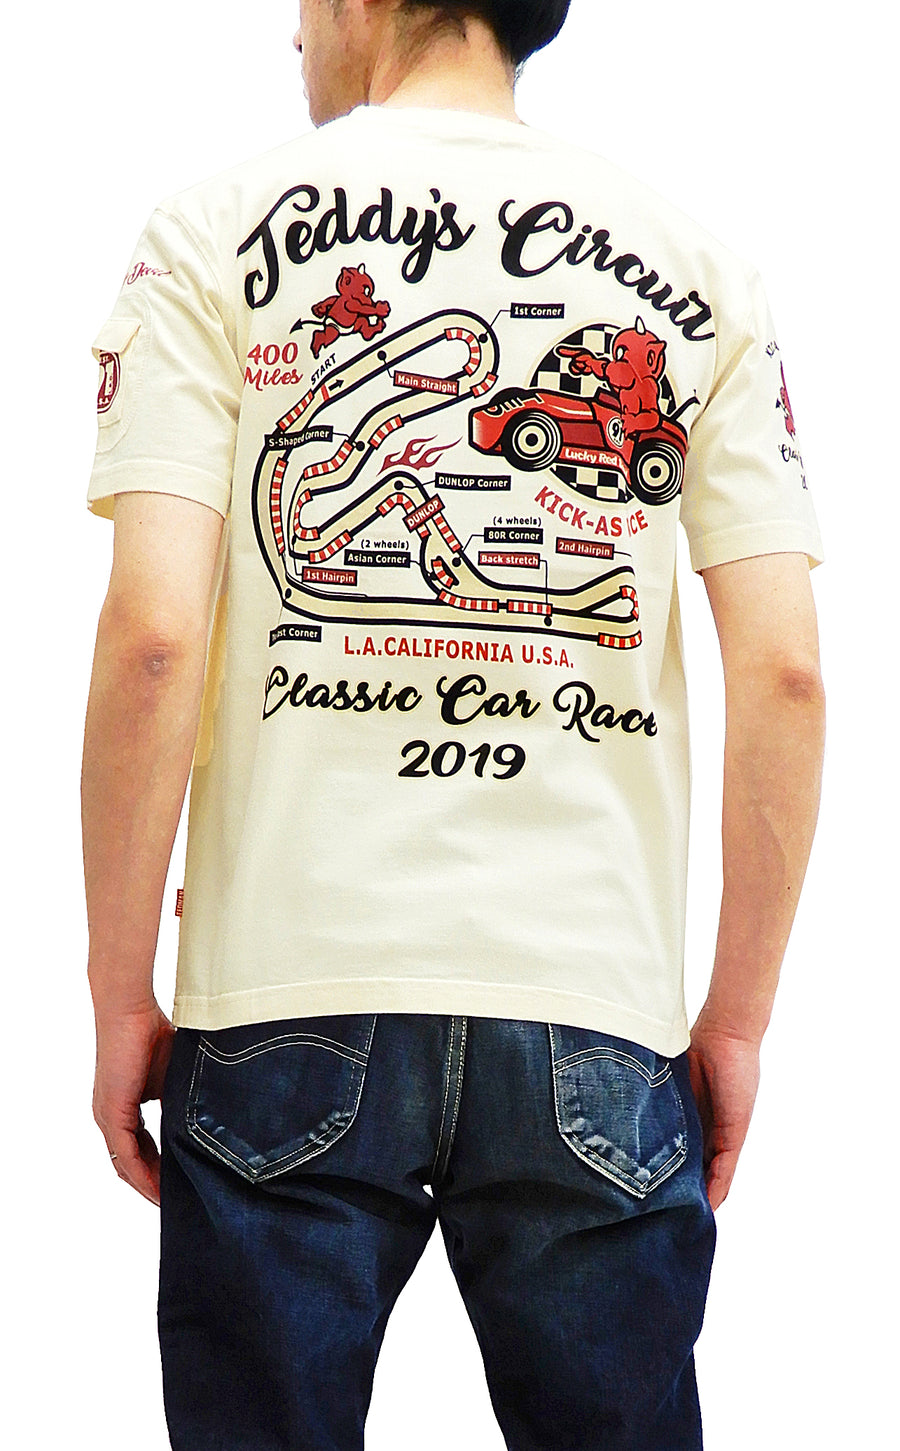 Tedman T-Shirt Men's Short Sleeve Auto Racing Motorsport Graphic Tee TDSS-491 Off-Color